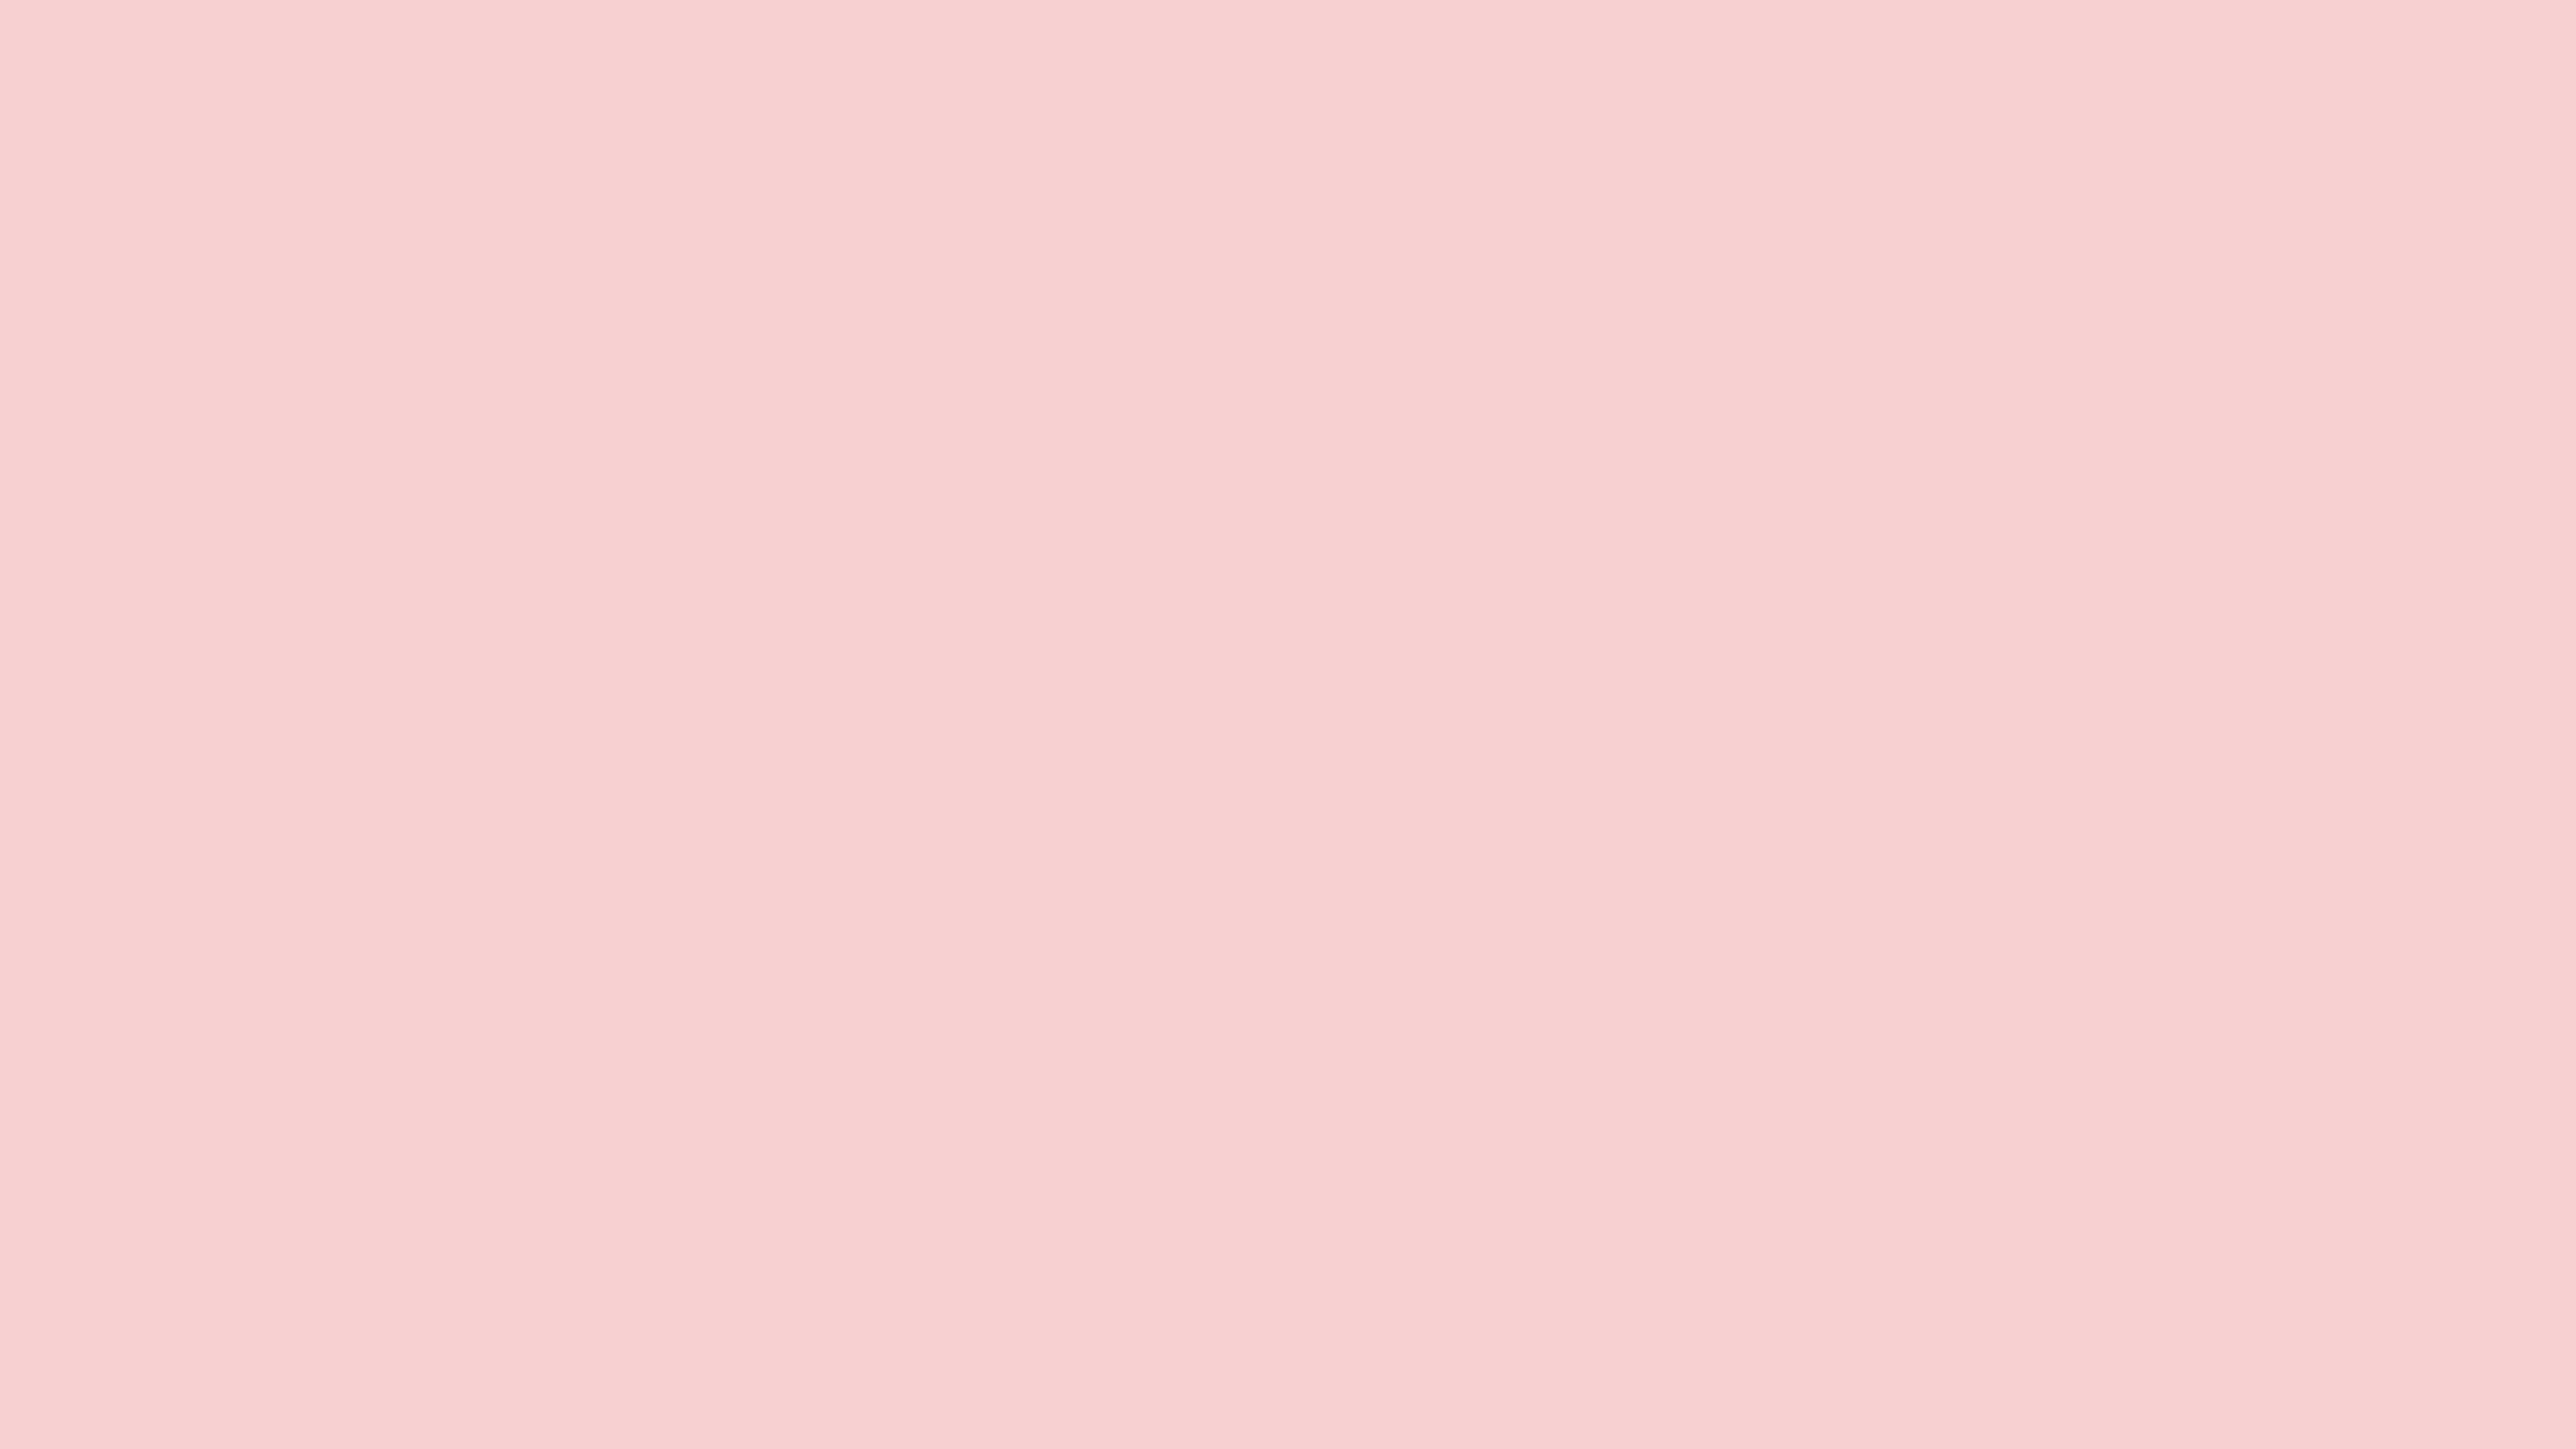 Pink Dogwood Solid Color Background Image | Free Image Generator